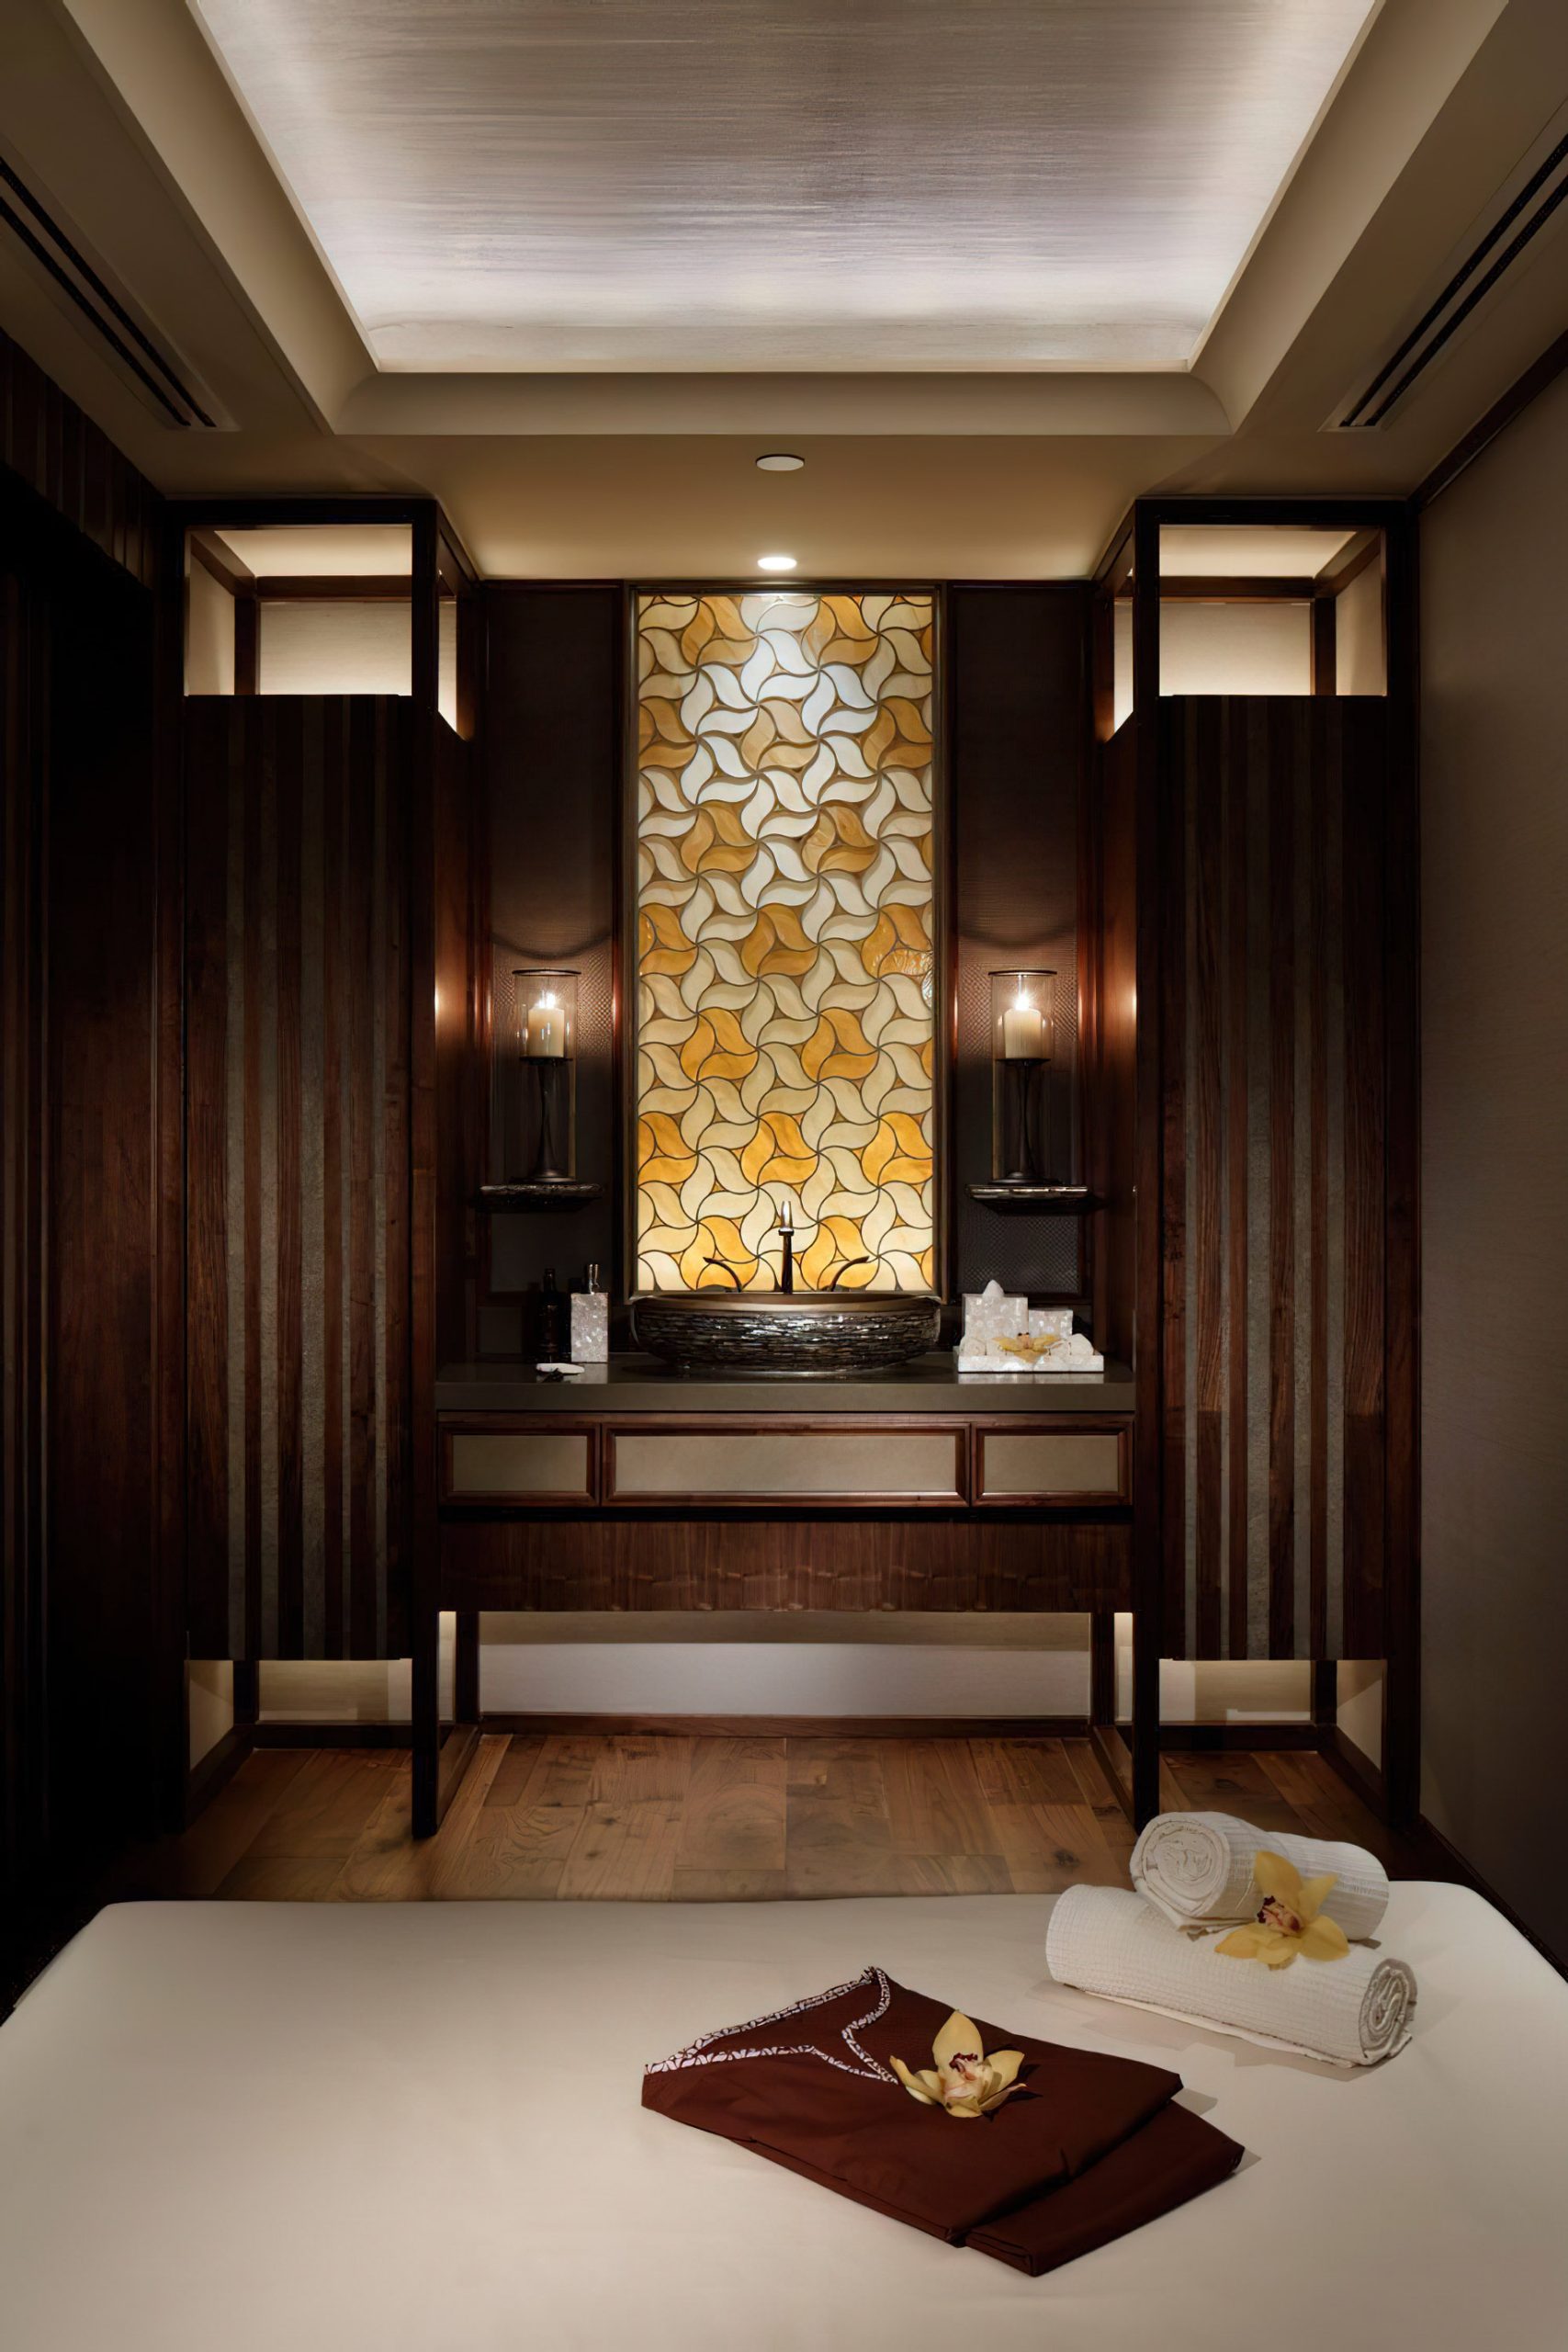 The Ritz-Carlton, Millenia Singapore Hotel – Singapore – Spa Treatment Room Decor